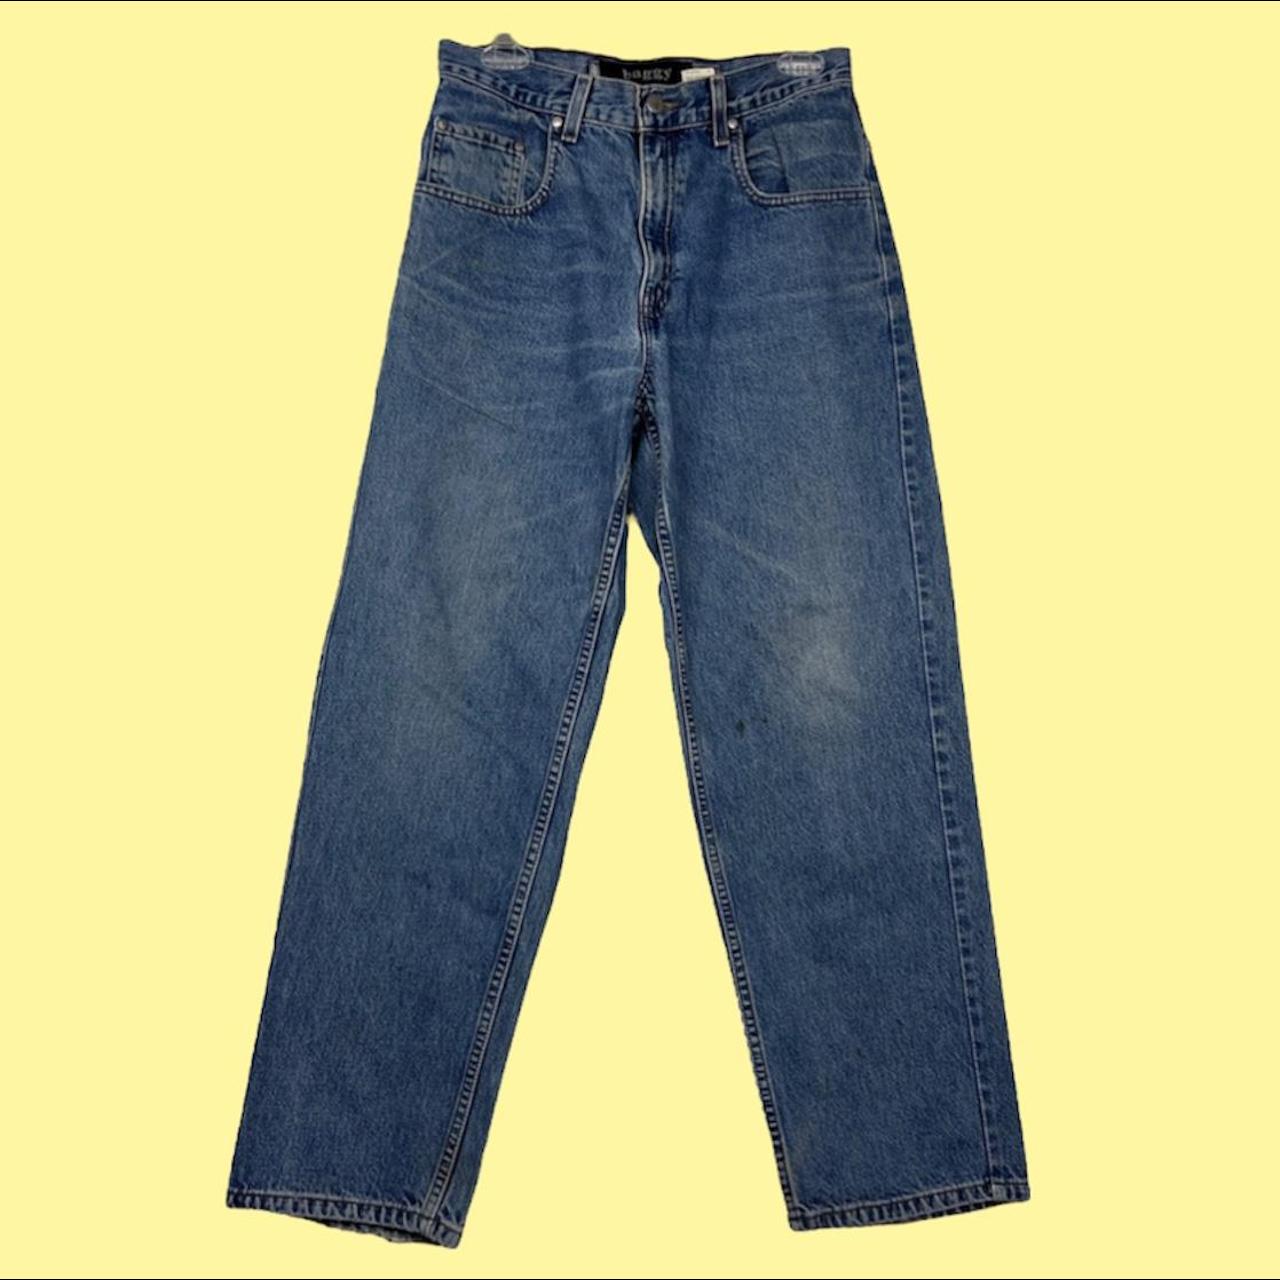 Levi’s Rare Vintage Baggy Silver Tab Jeans Has a... - Depop